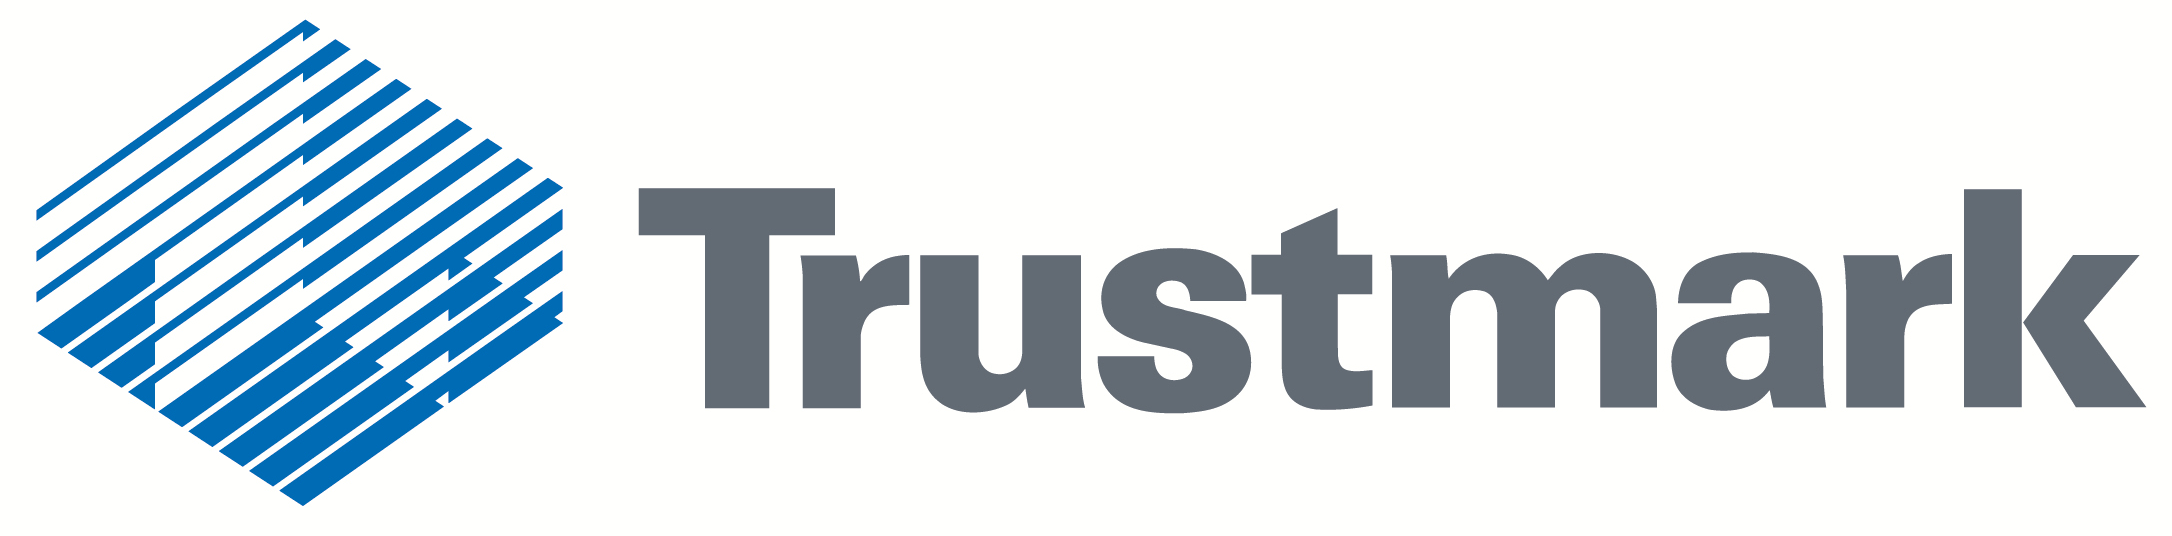 Trustmark Logo - Cocktails for the Coast